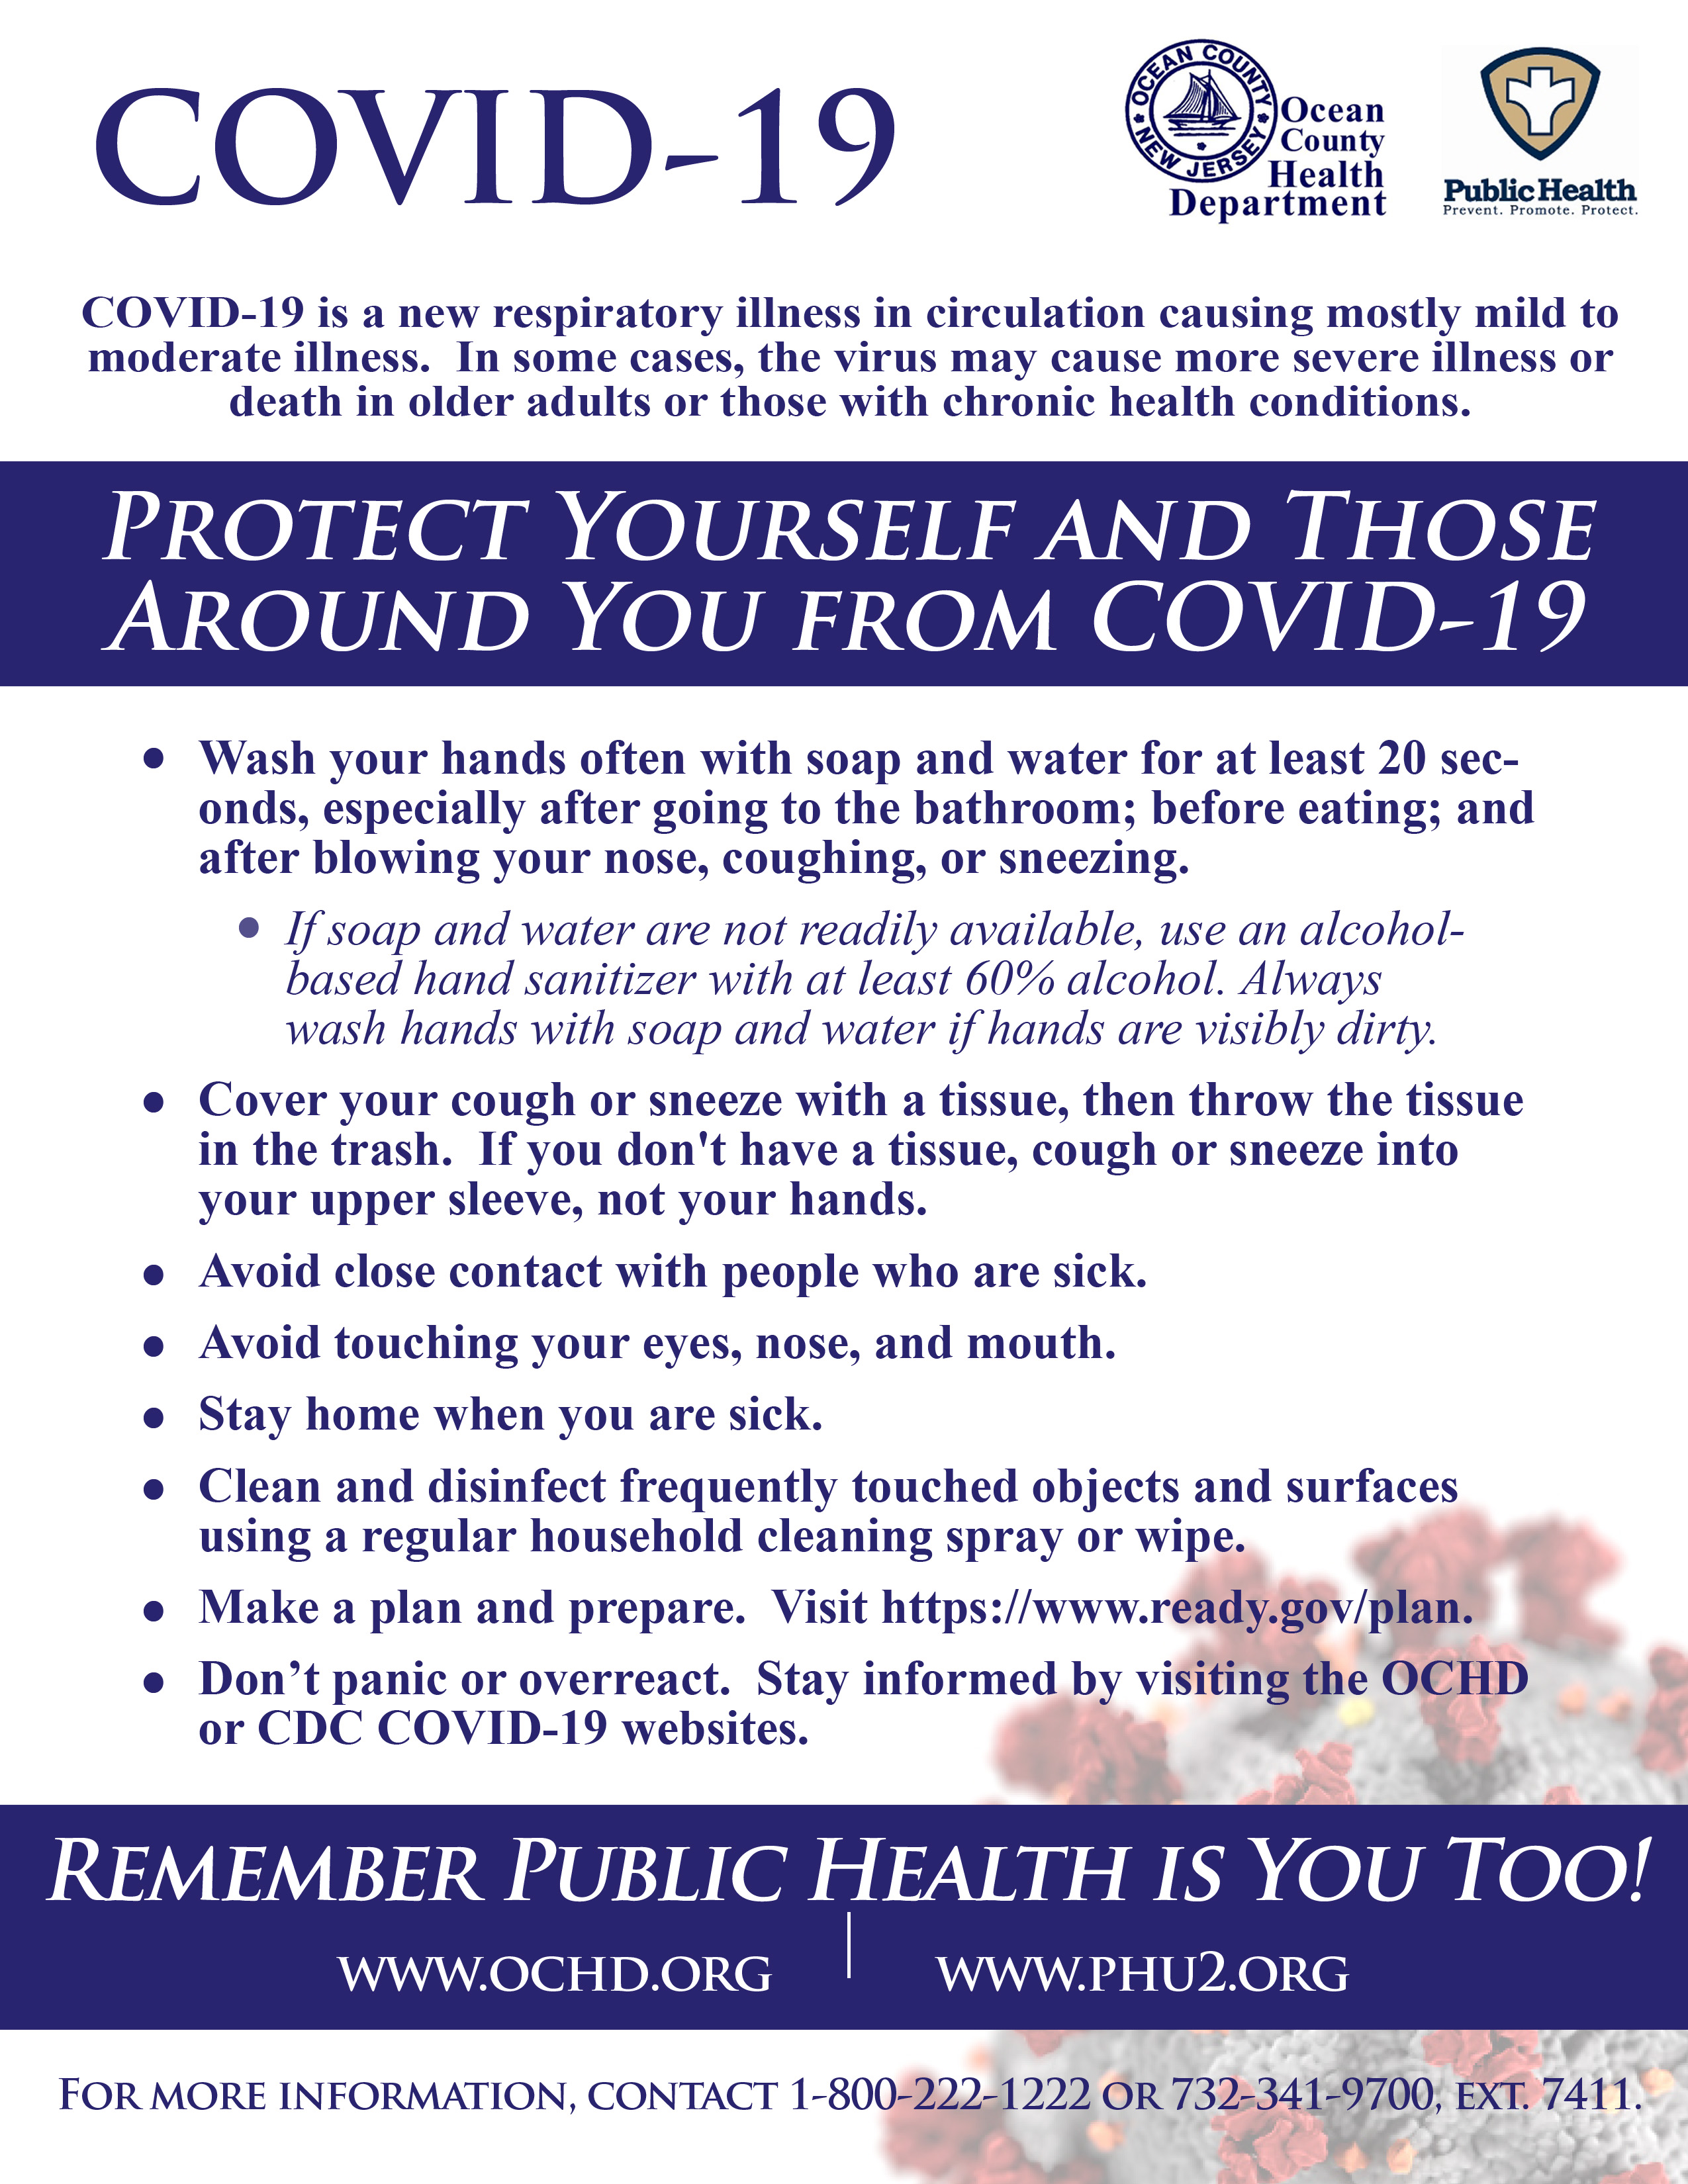 Covid-19 Ocean County Health Department